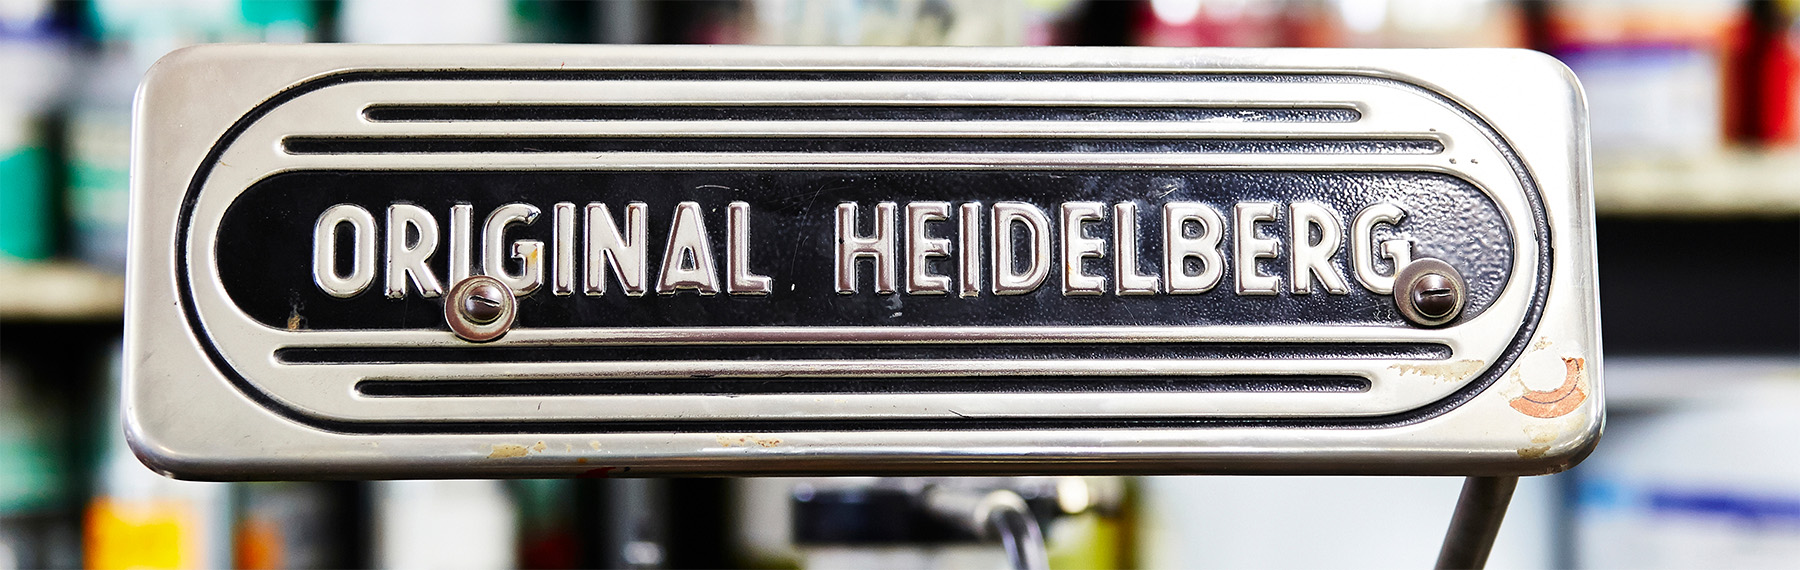 Original heidelberg press